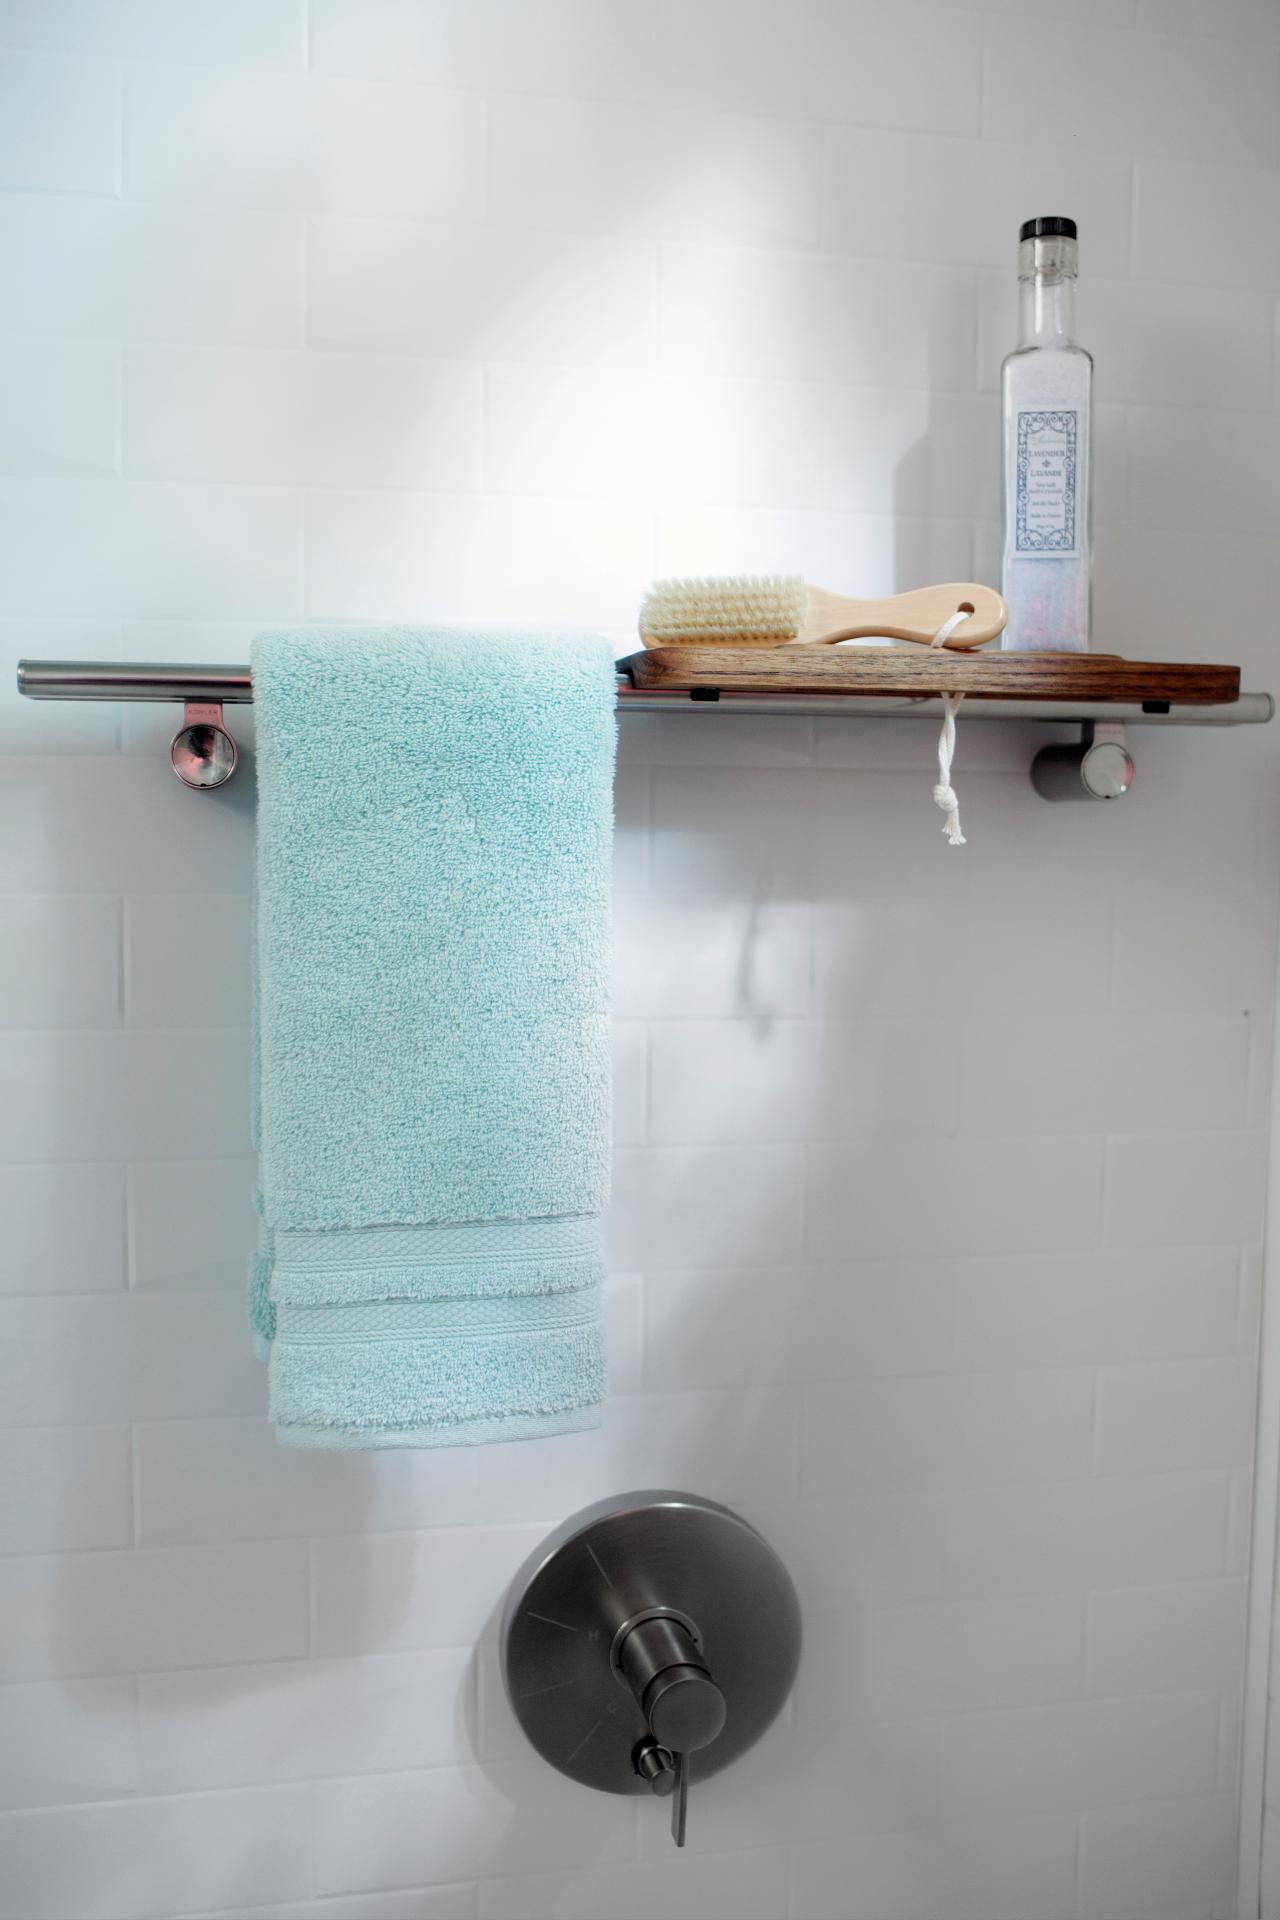 https://hgtvhome.sndimg.com/content/dam/images/hgtv/fullset/2015/6/30/1/uo2015_guest-bathroom-interior-shower-tile-shlef-towel-brush_v.jpg.rend.hgtvcom.1280.1920.suffix/1435690473918.jpeg